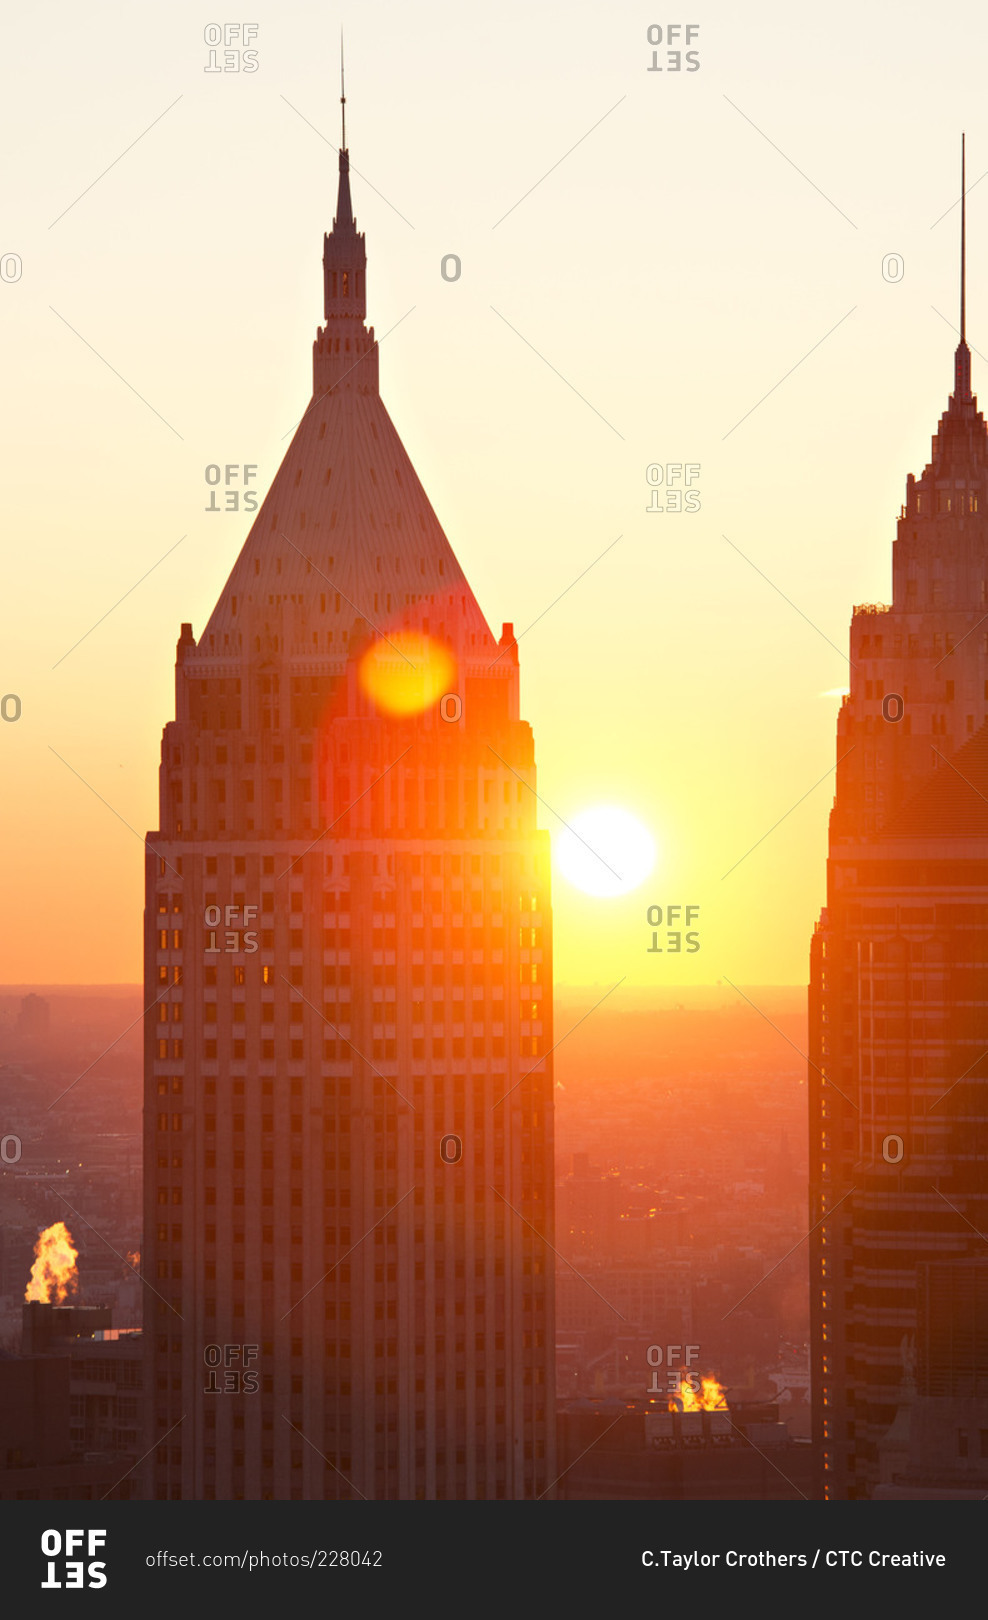 Sun setting between skyscrapers in Manhattan